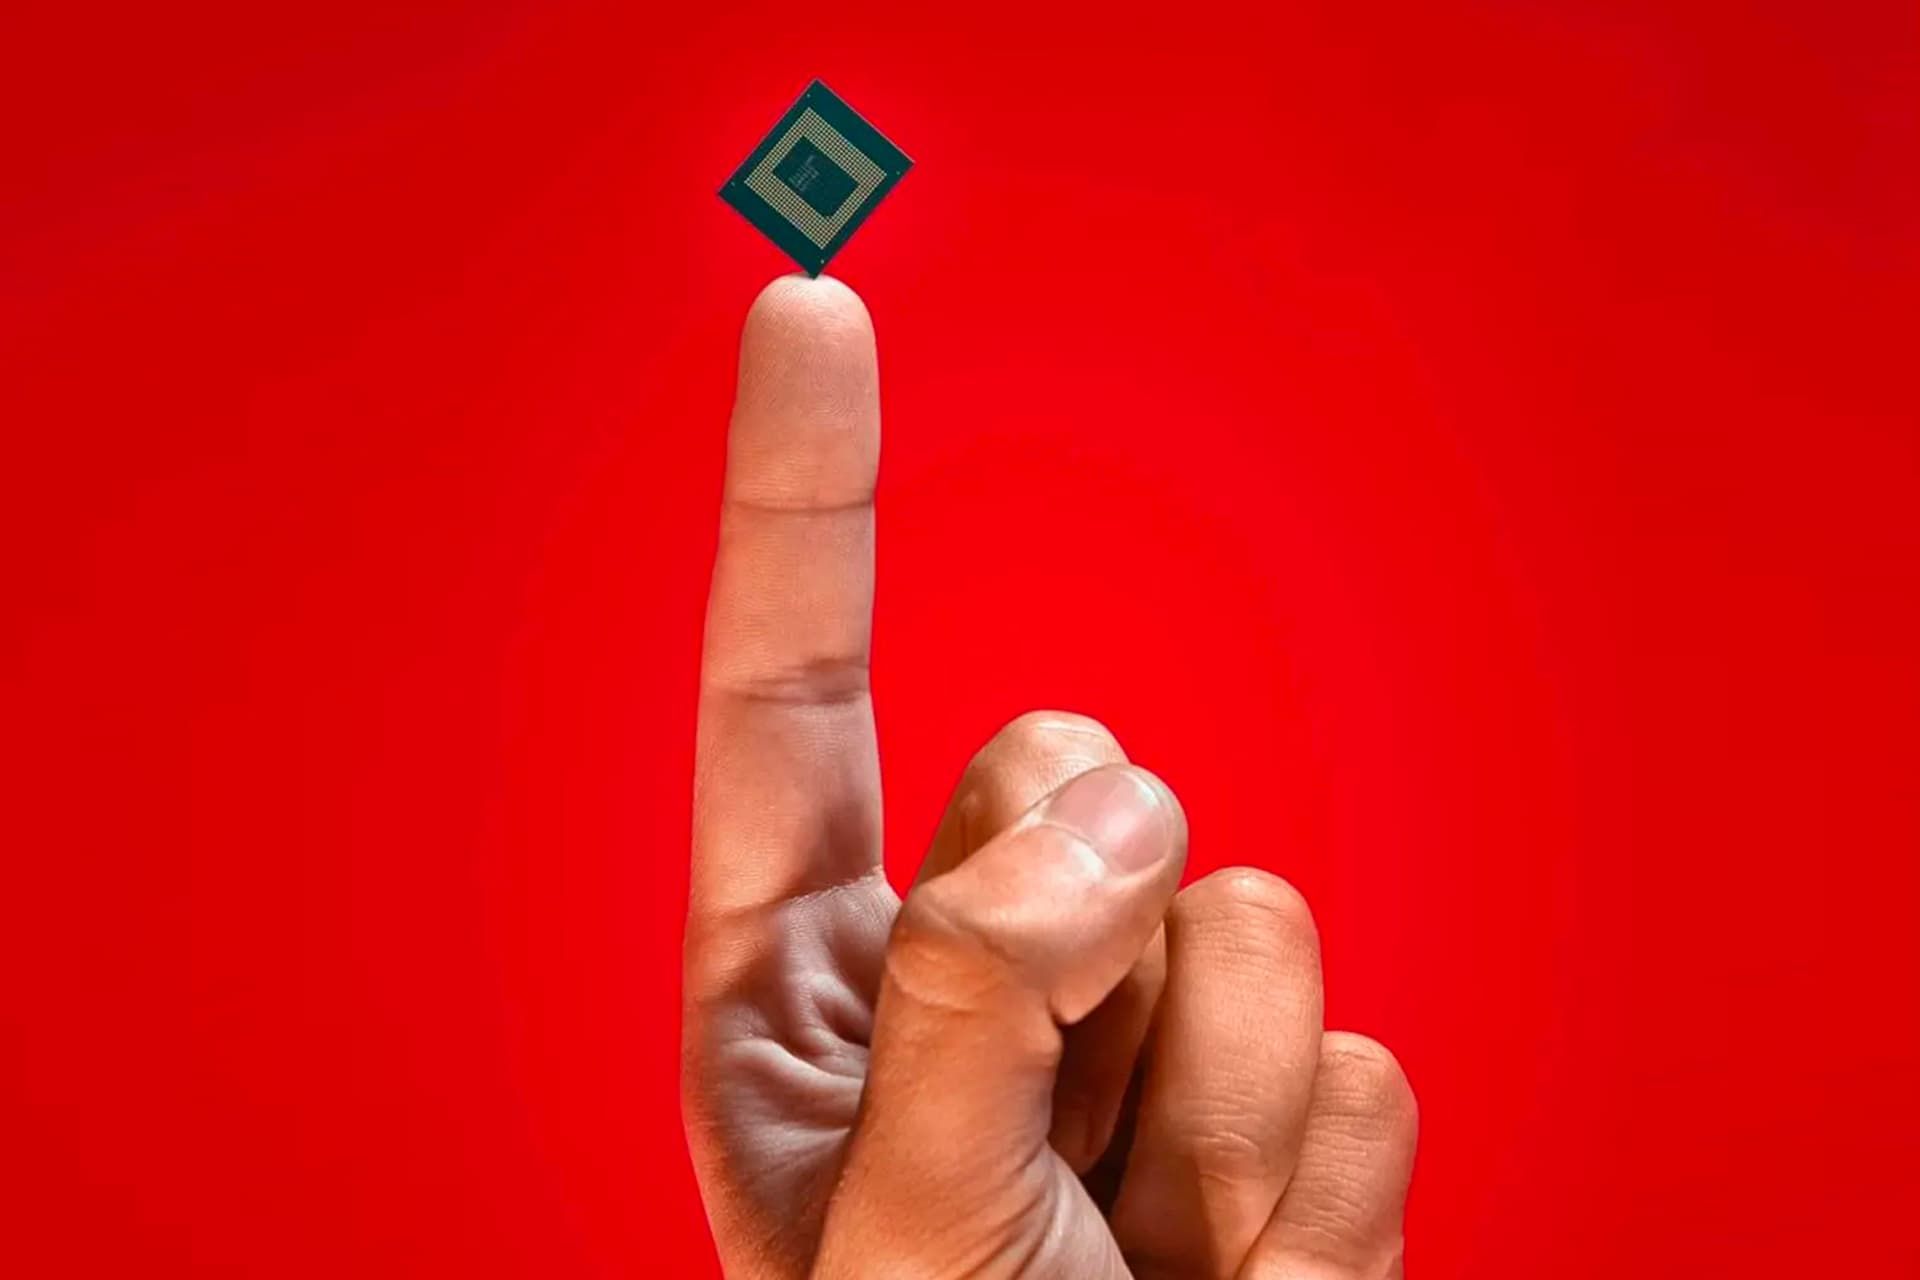 پردازنده اسنپدراگون ۸ نسل ۳ / Snapdragon 8 Gen 3 روی انگشت اشاره